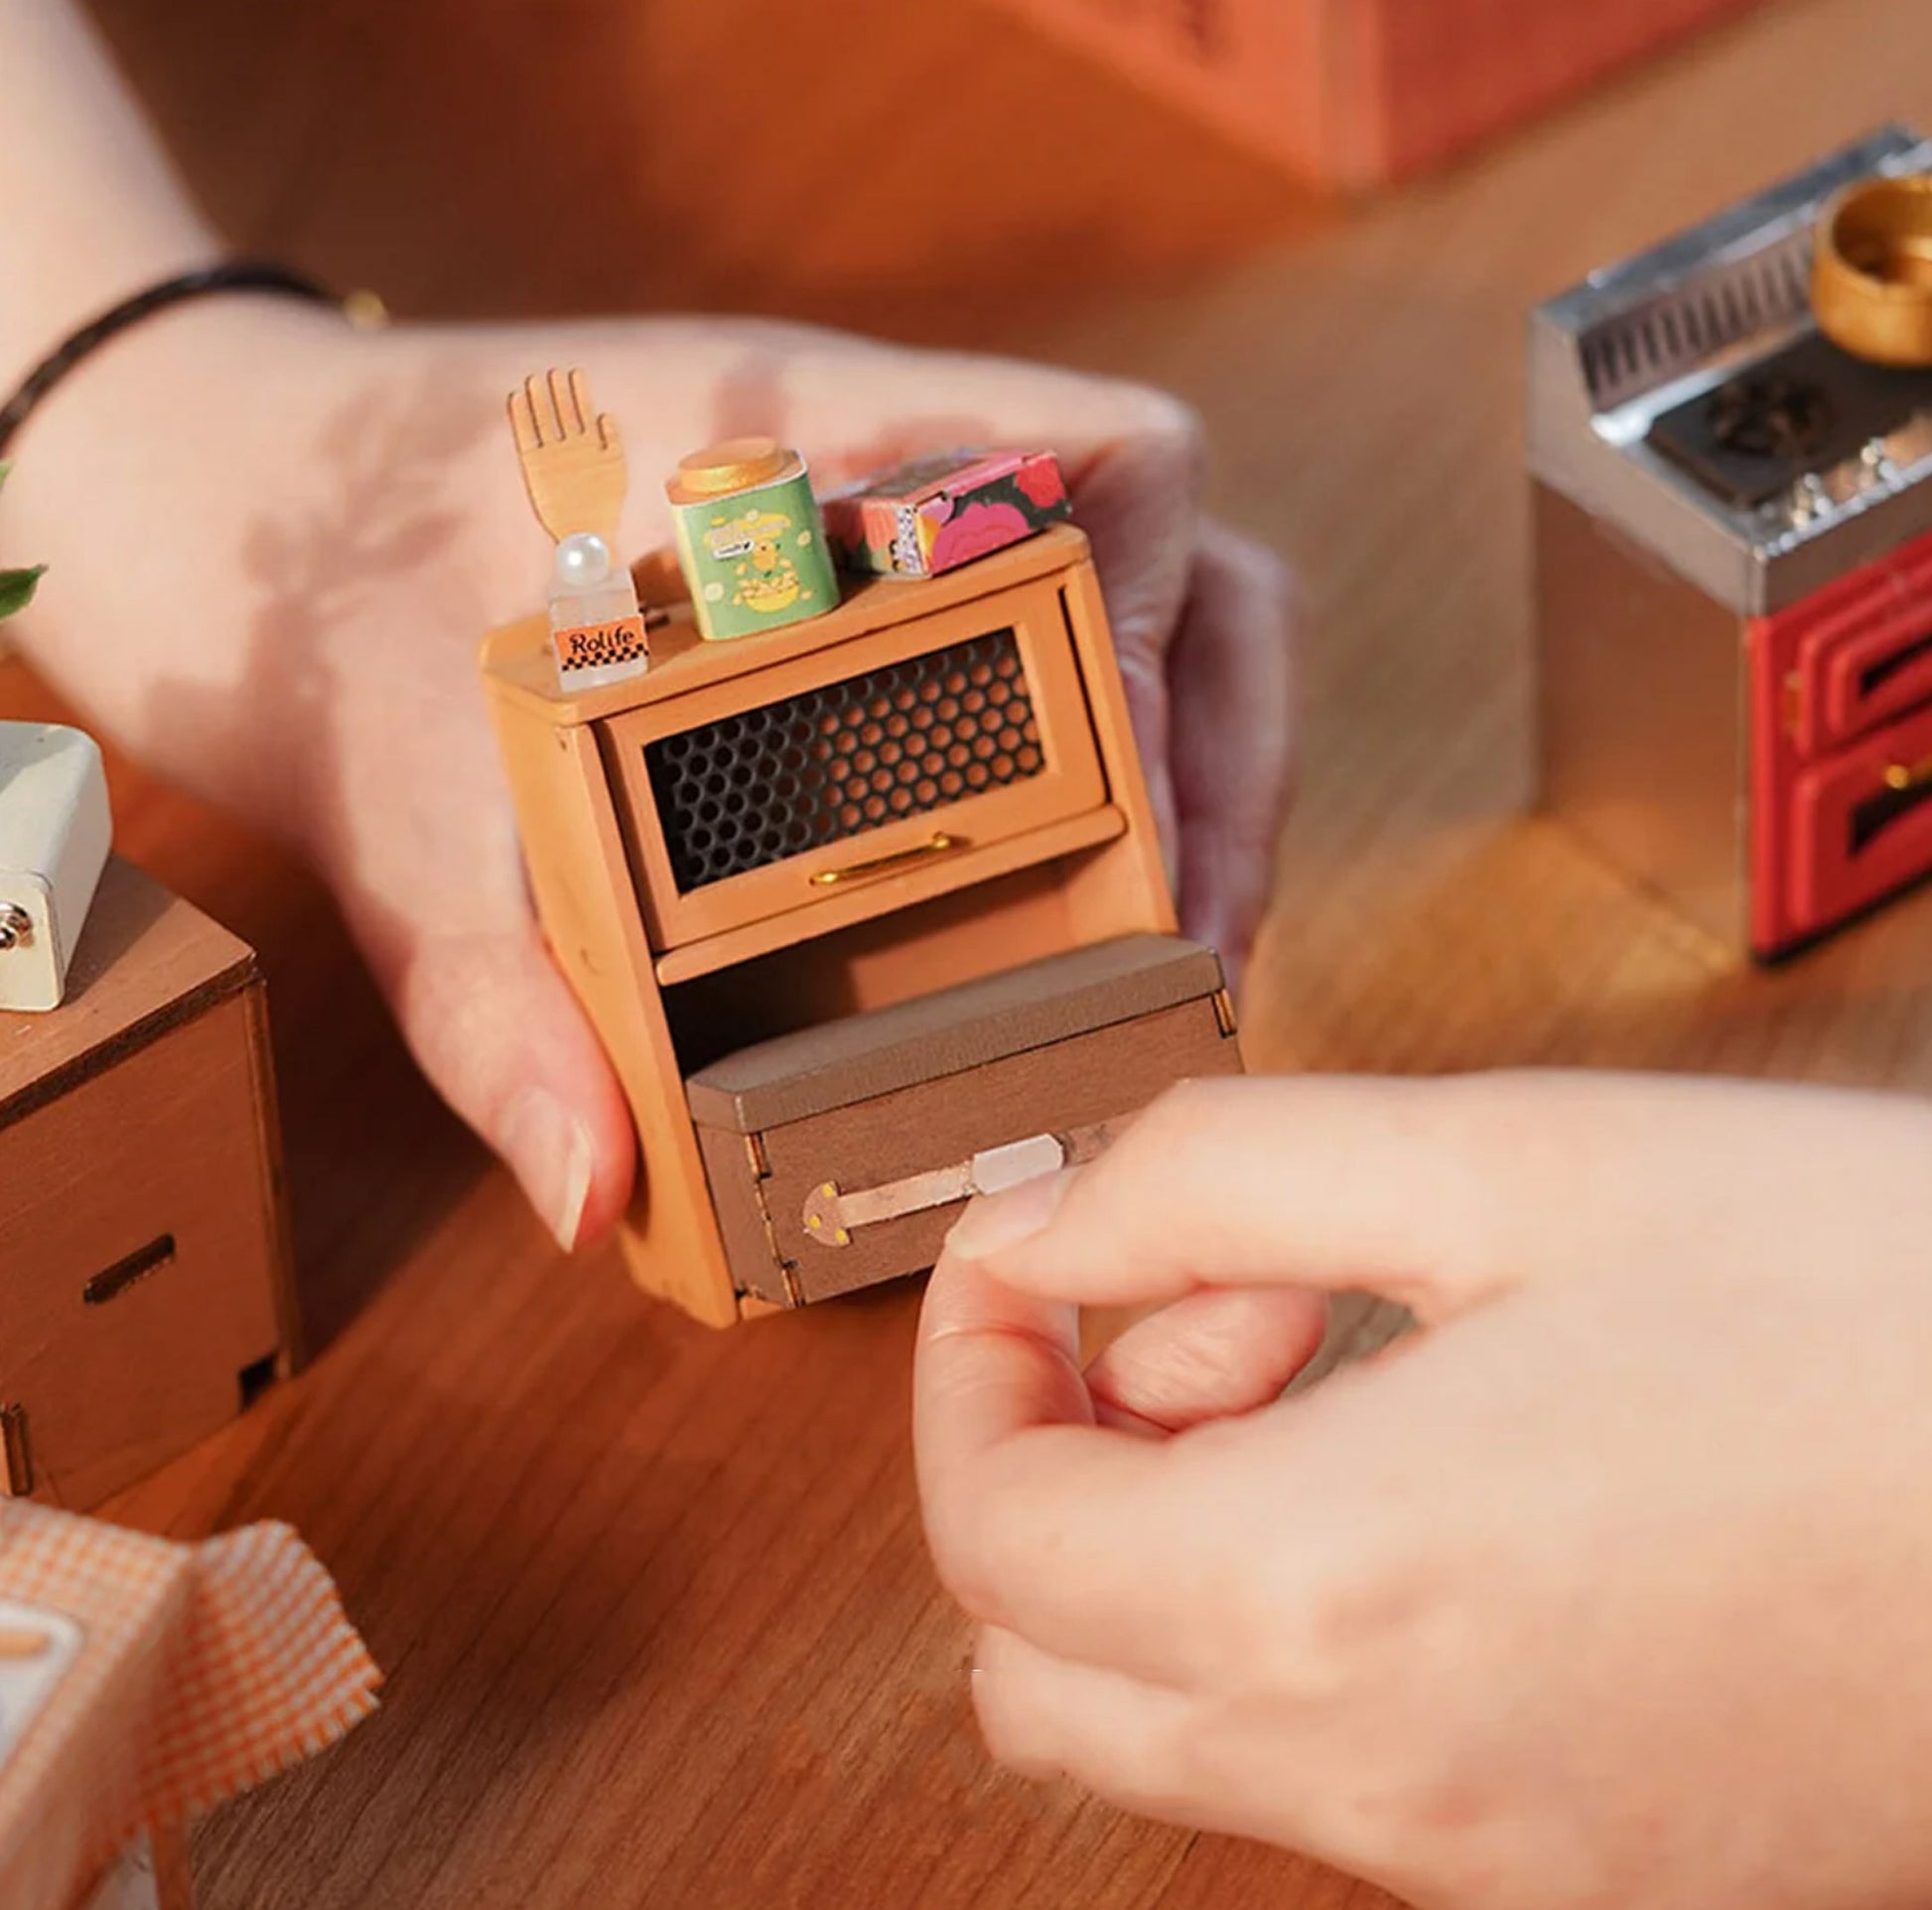 Rolife DIY Miniature House - Cozy Kitchen DG159